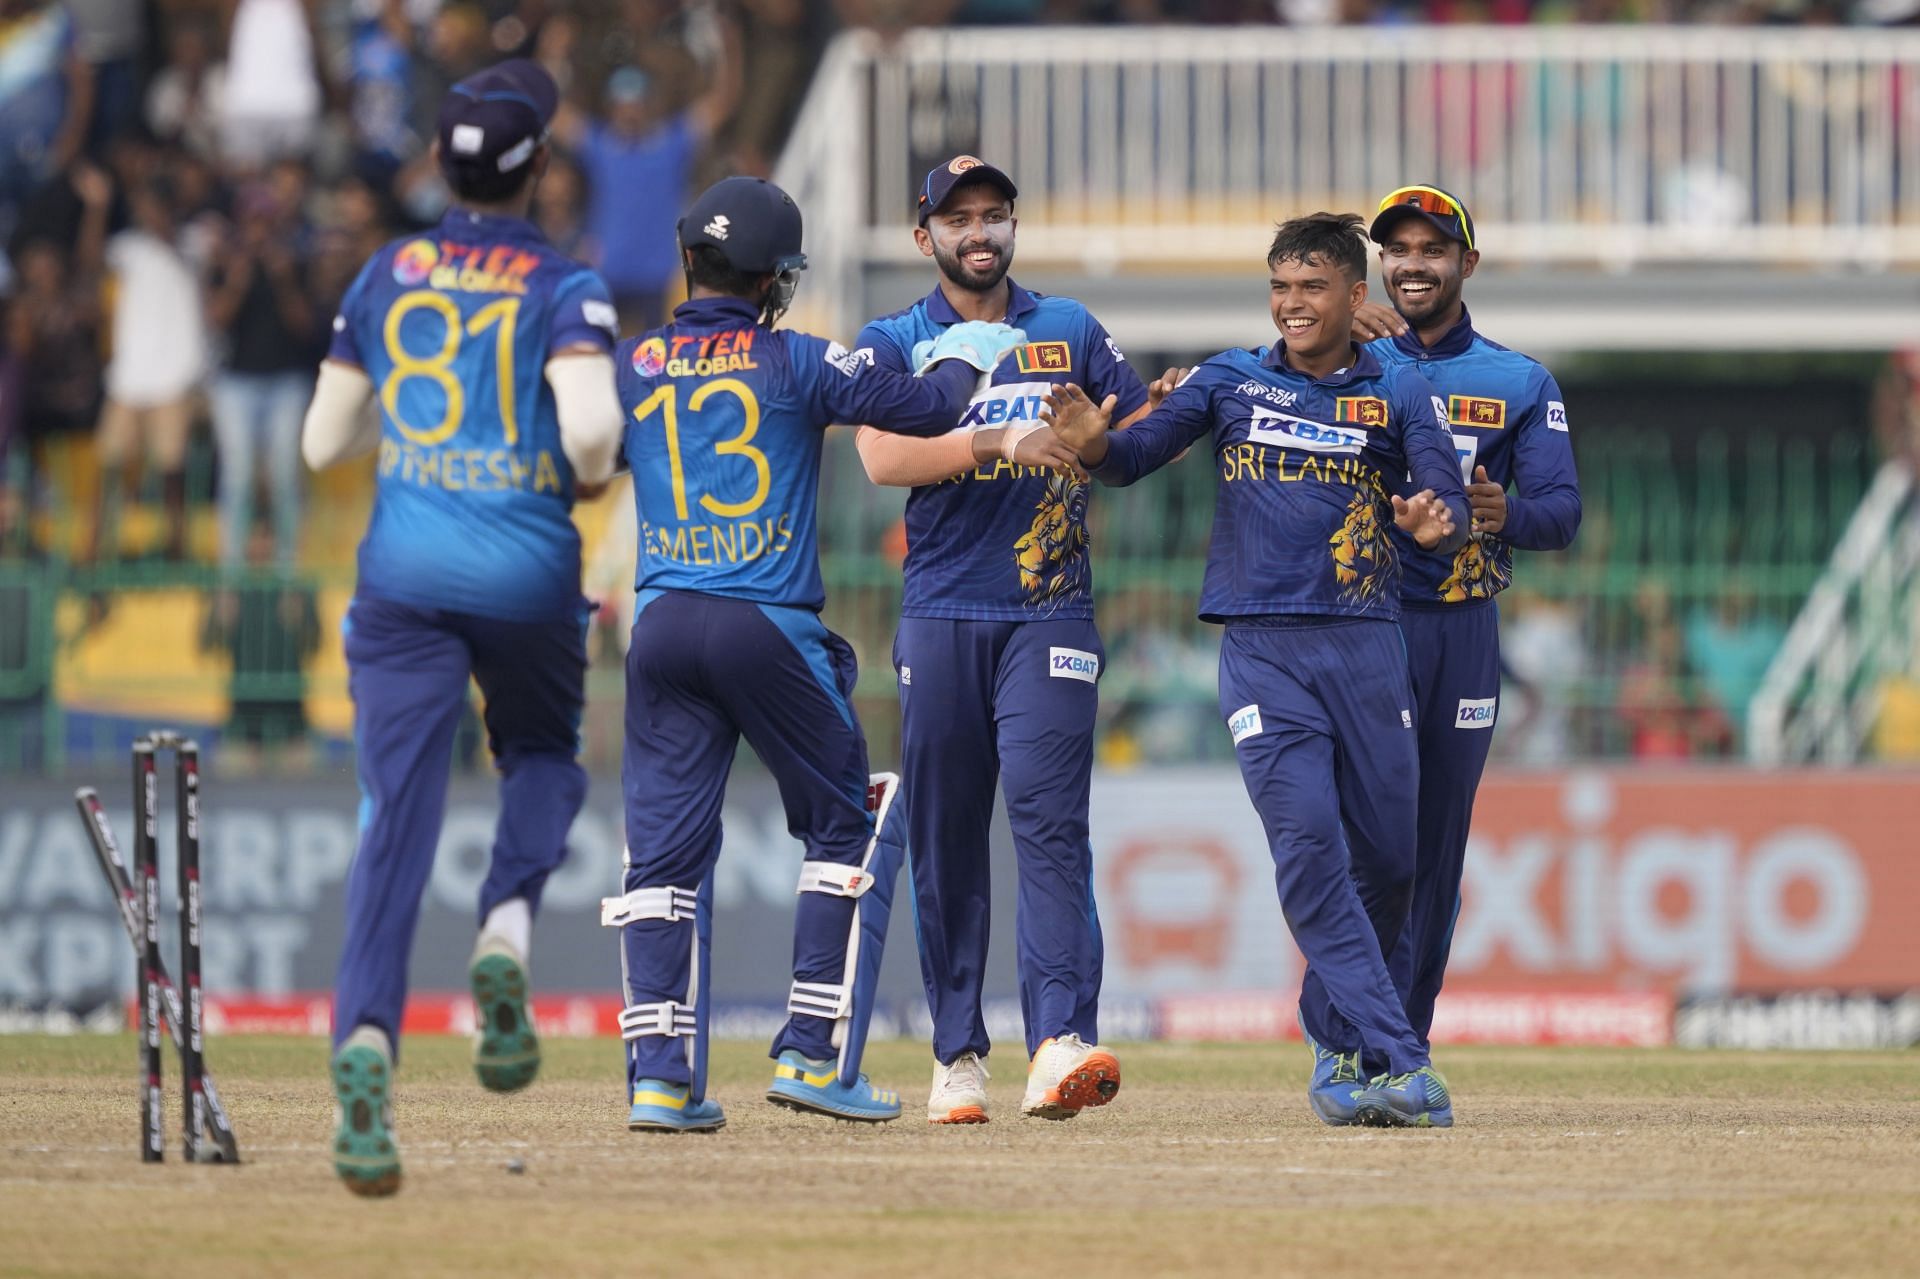 Sri Lanka went down to India by 41 runs in Colombo. (Pic: AP Photo/Eranga Jayawardena)